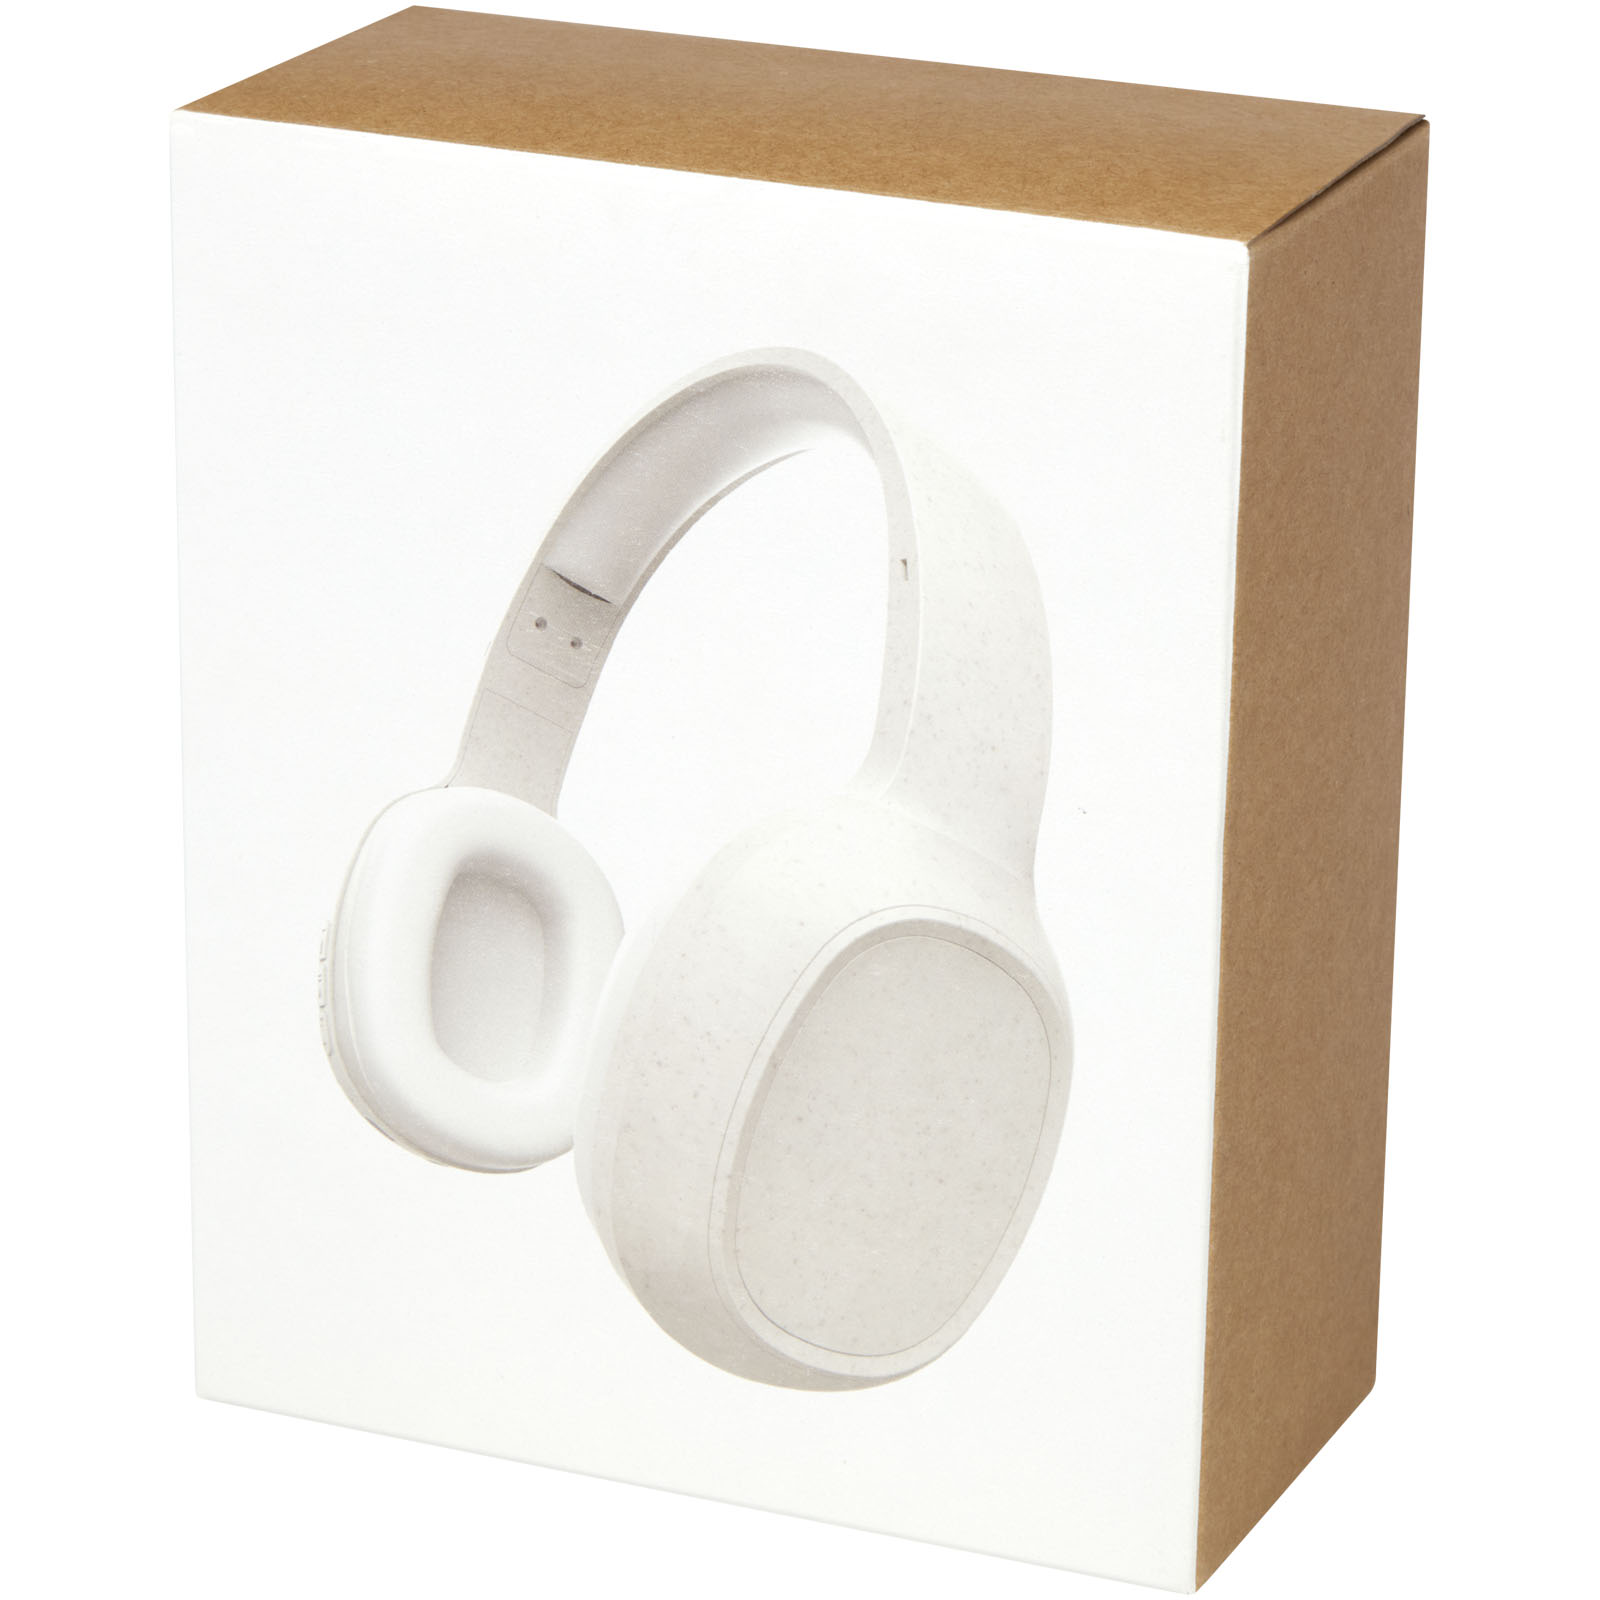 Advertising Headphones - Riff wheat straw Bluetooth® headphones with microphone - 1